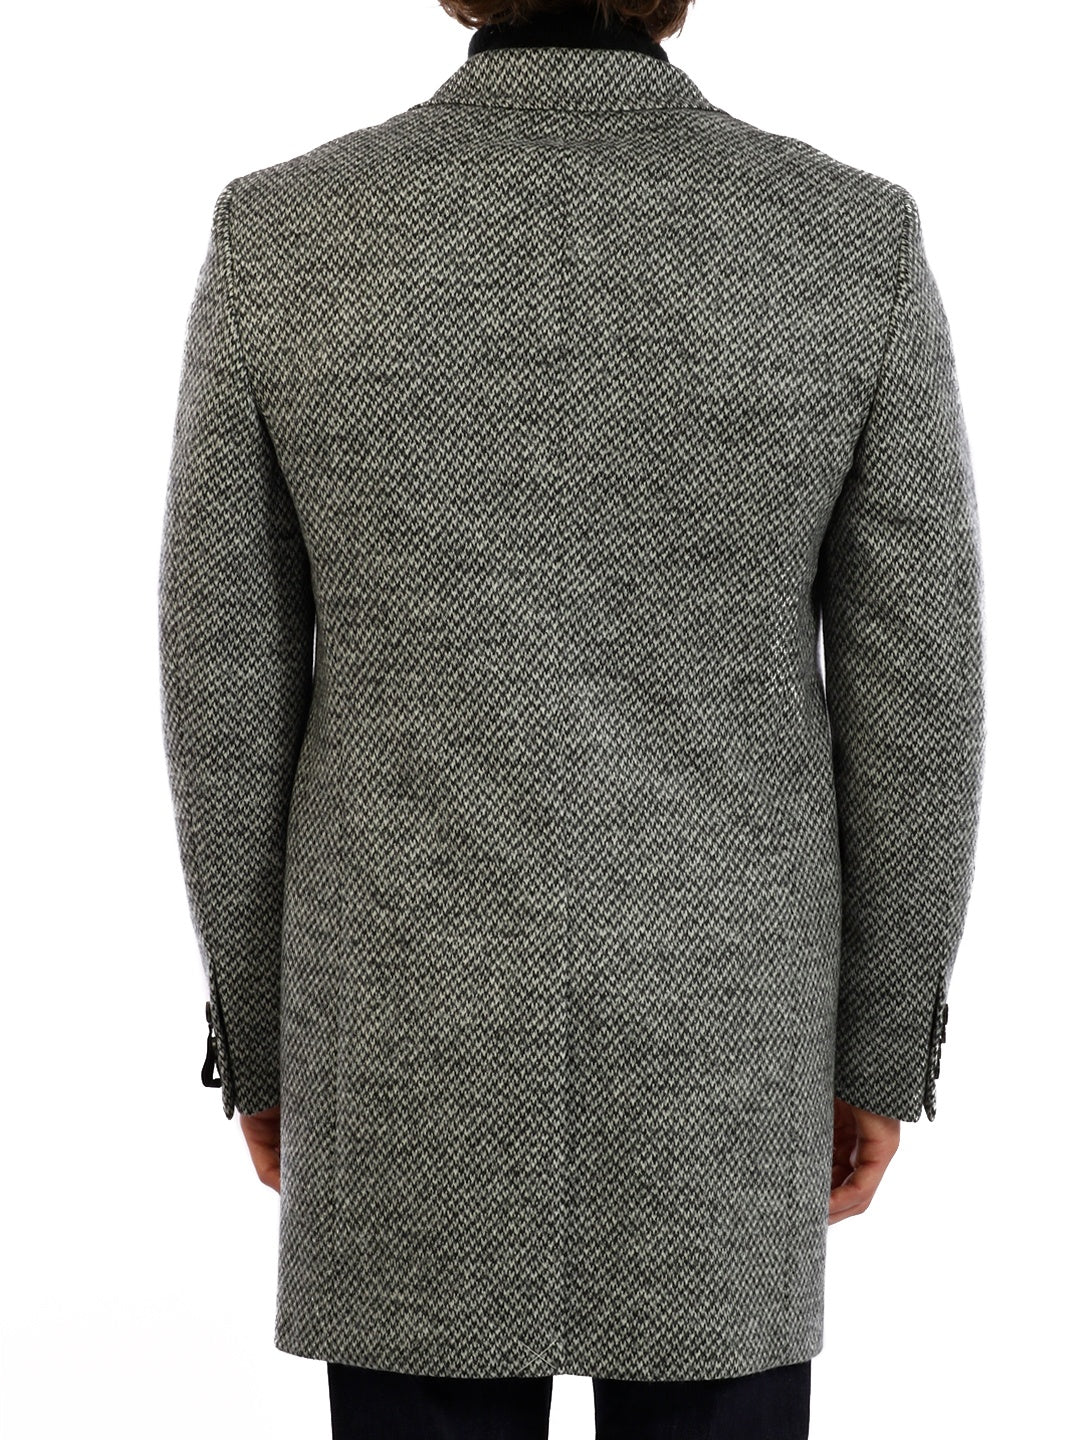 Gray Wool Coat